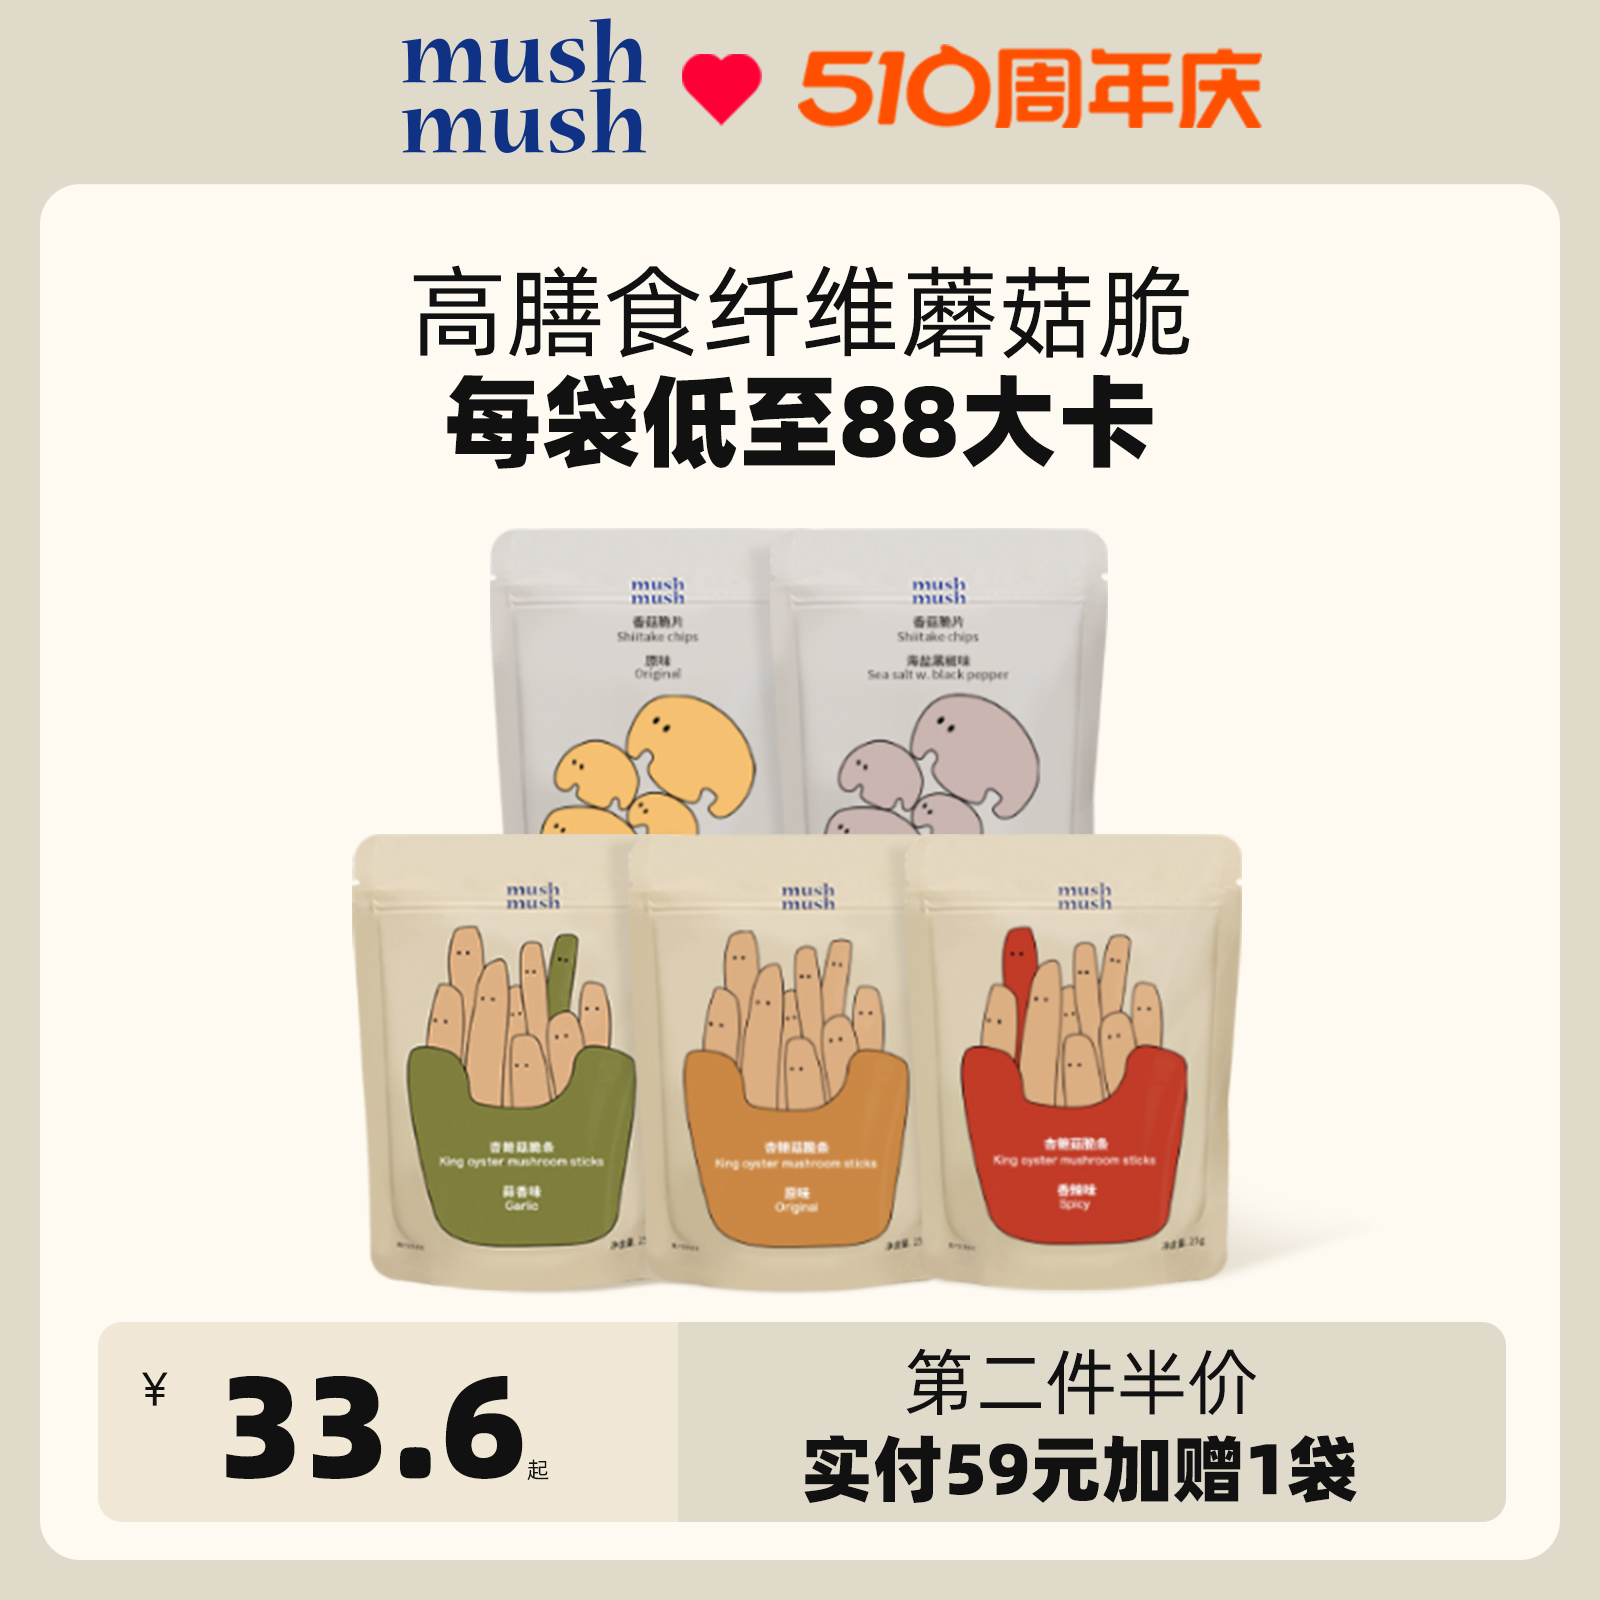 mushmush mush mush mushmush杏鲍菇脆条 即食香菇脆混合袋装孕妇办公室休闲零食